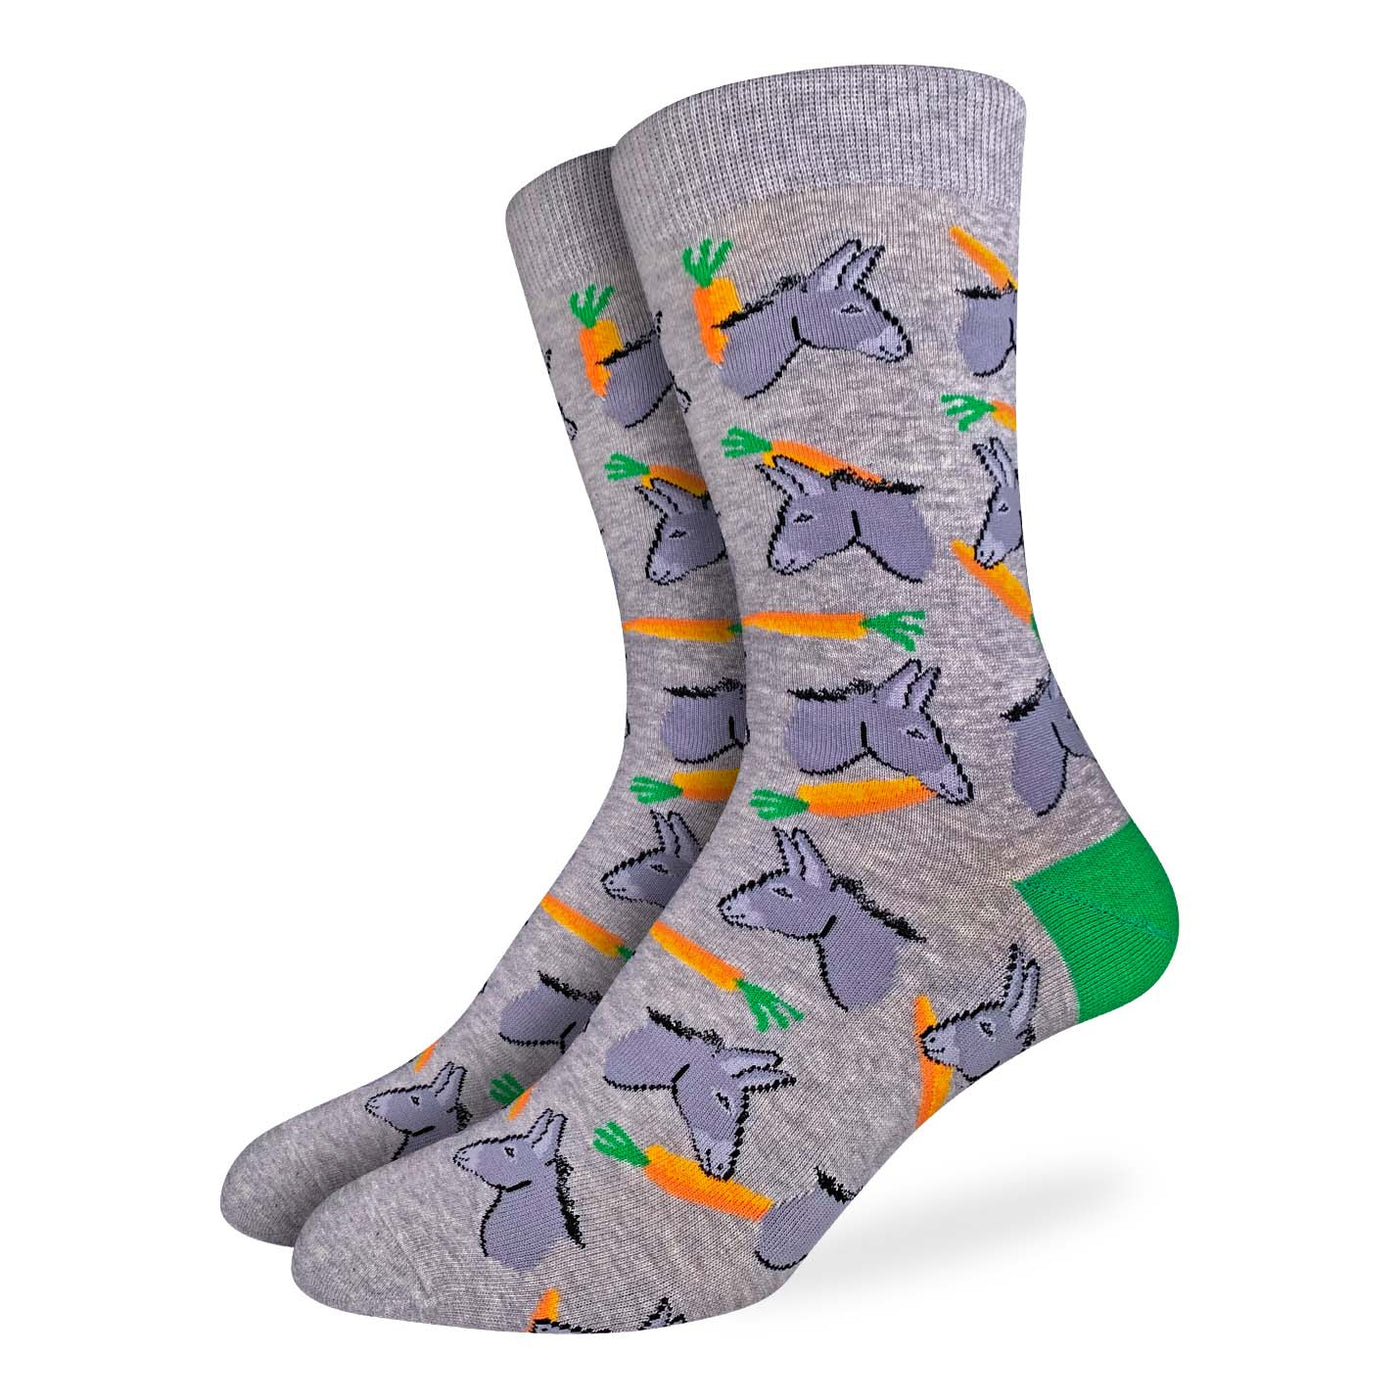 "Donkeys & Carrots" Crew Socks by Good Luck Sock